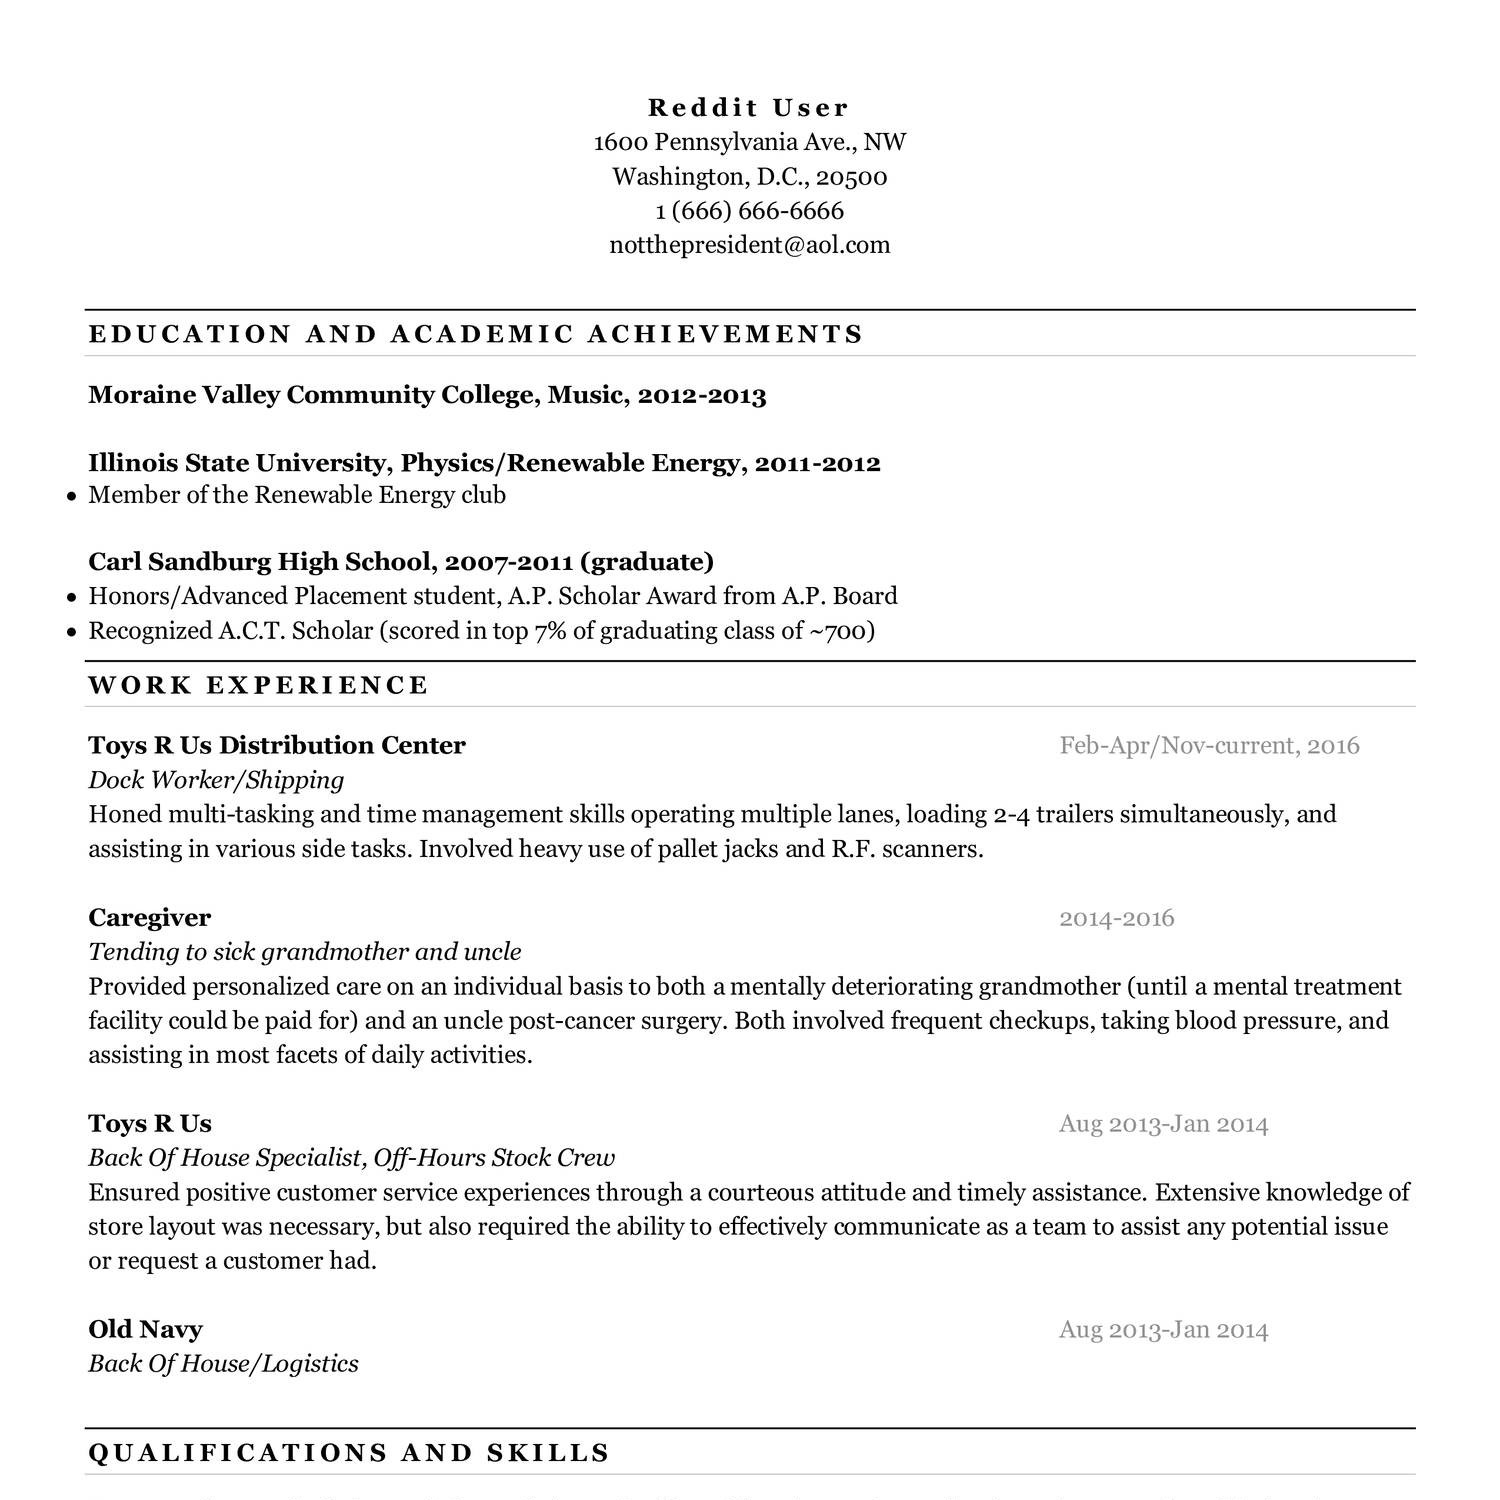 rawls college of business resume template reddit